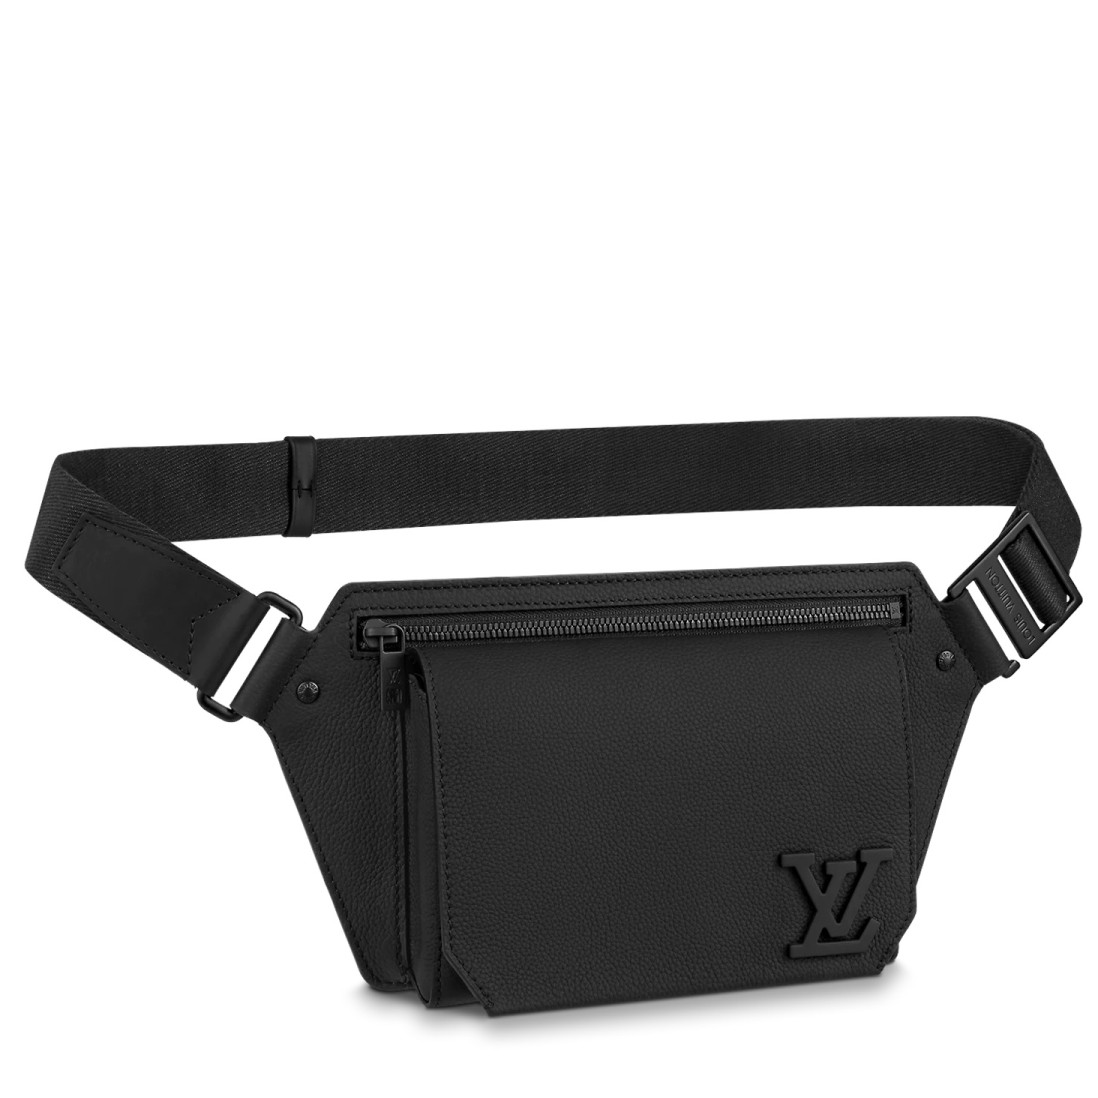 LOUIS VUITTON Pocket Organizer LV Aerogram Black M69979 with Box